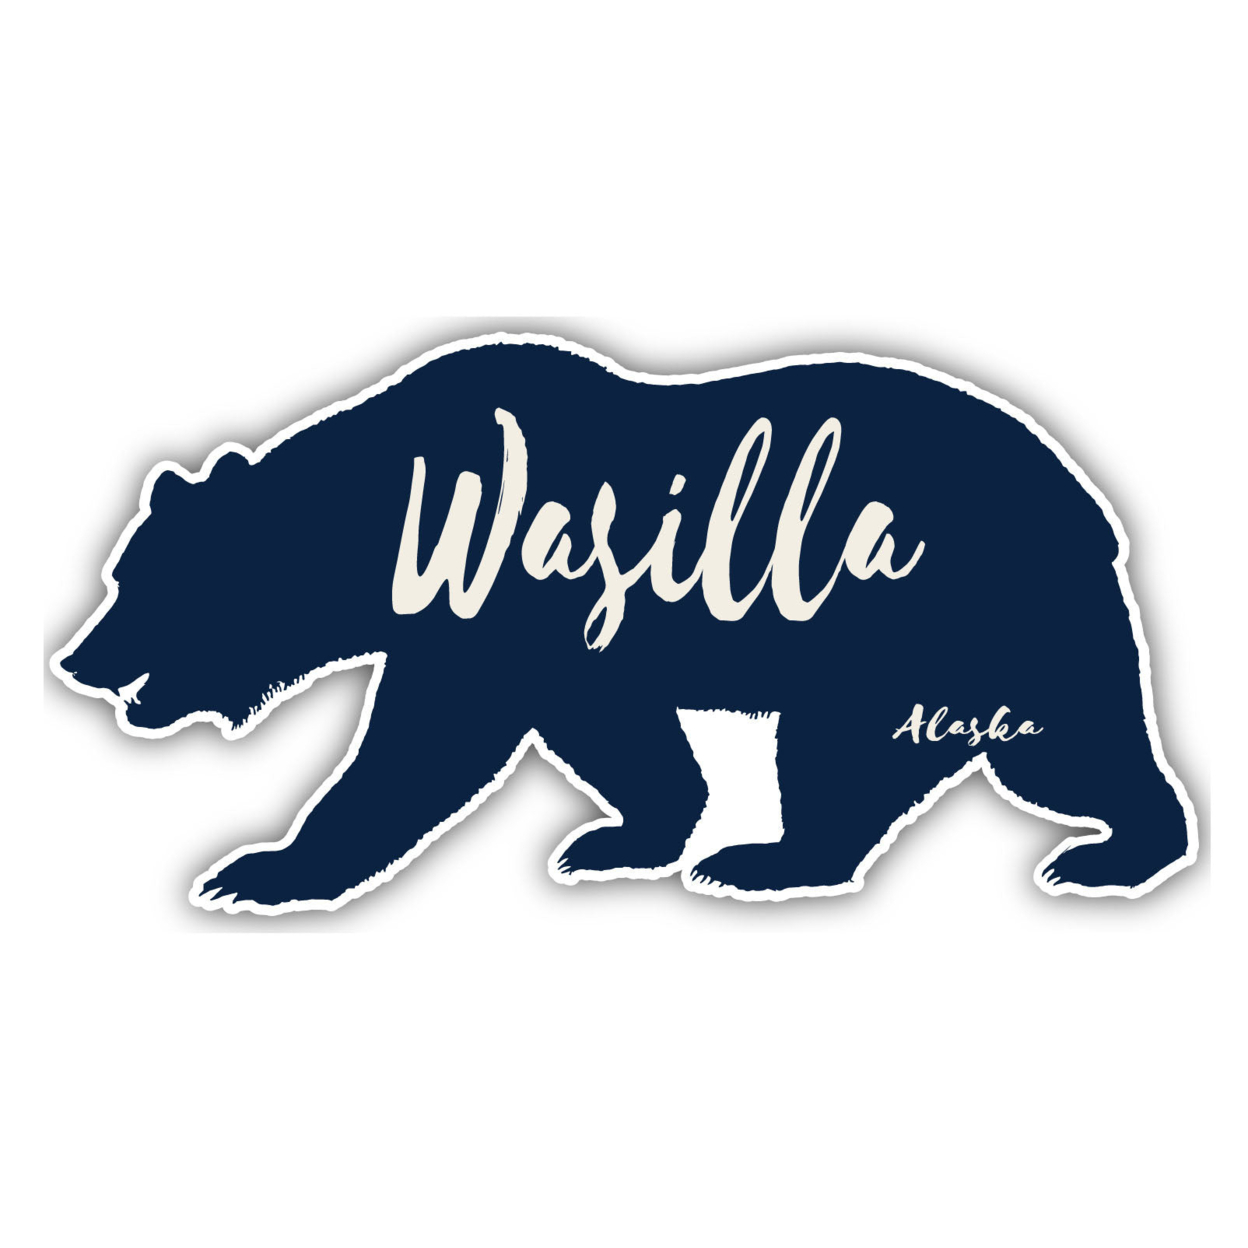 Wasilla Alaska Souvenir Decorative Stickers (Choose Theme And Size) - Single Unit, 4-Inch, Great Outdoors